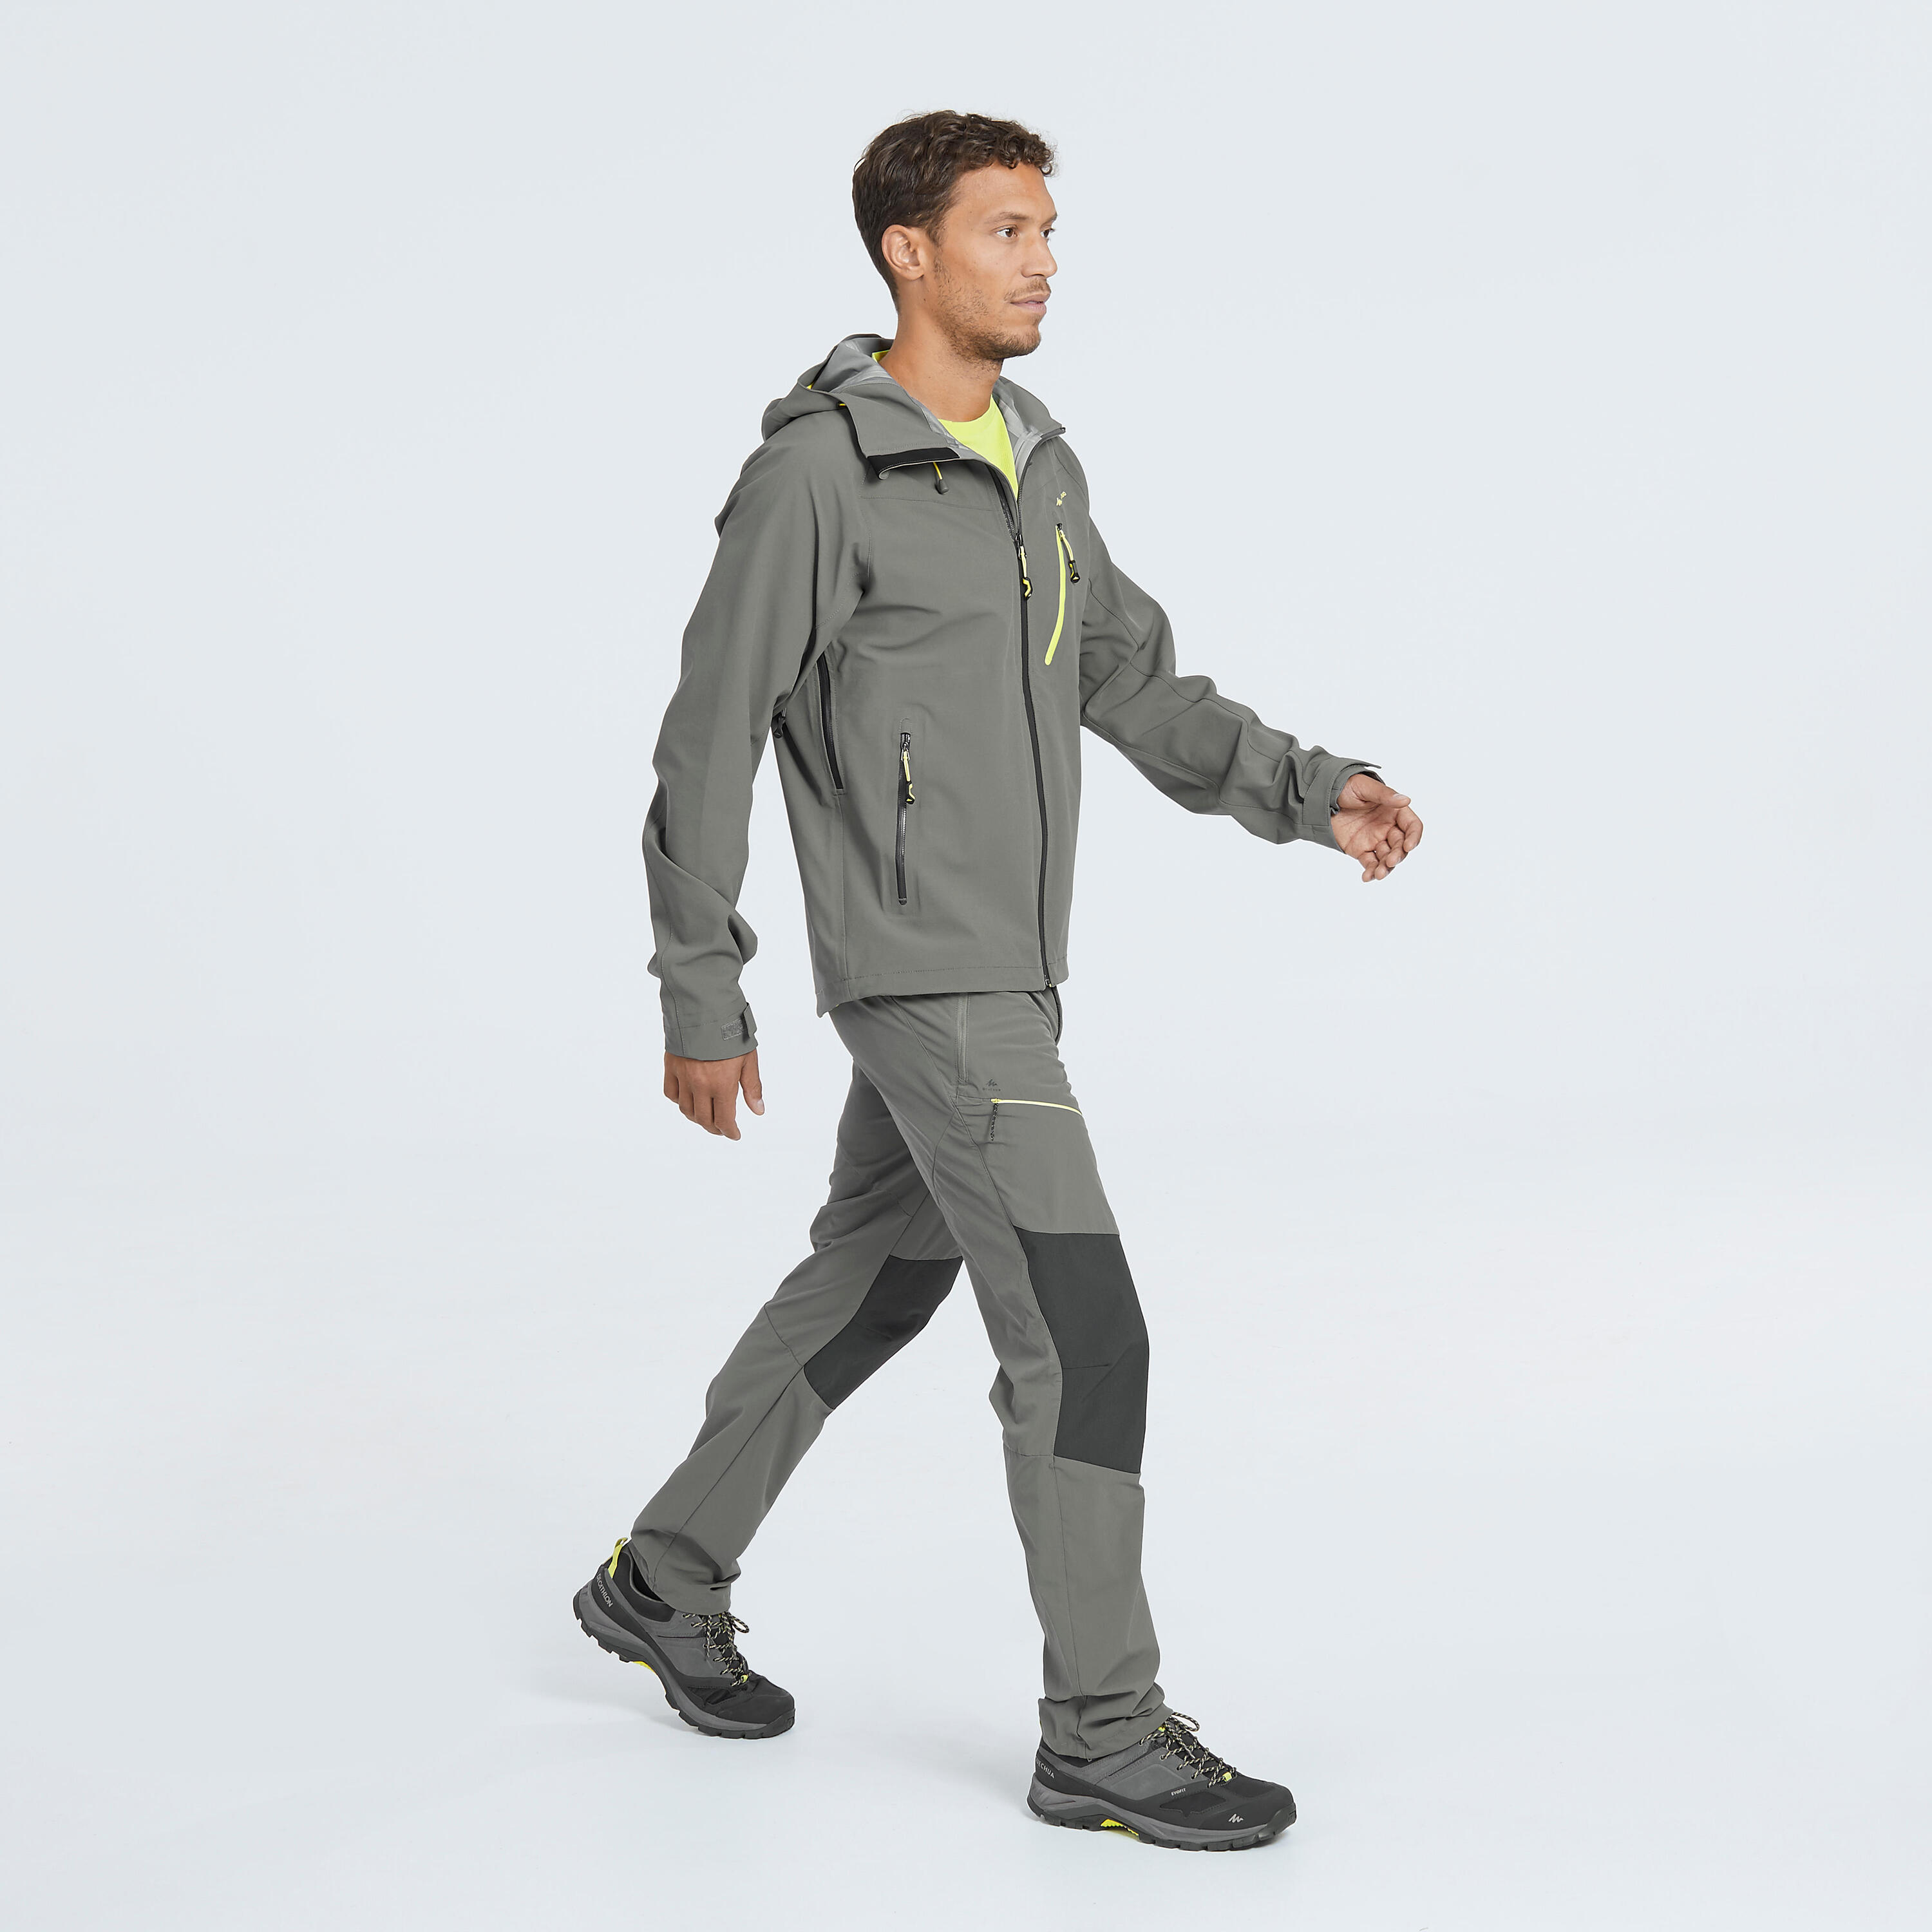 MH500 Men's Waterproof Mountain Hiking Rain Jacket - Grey Khaki 4/12